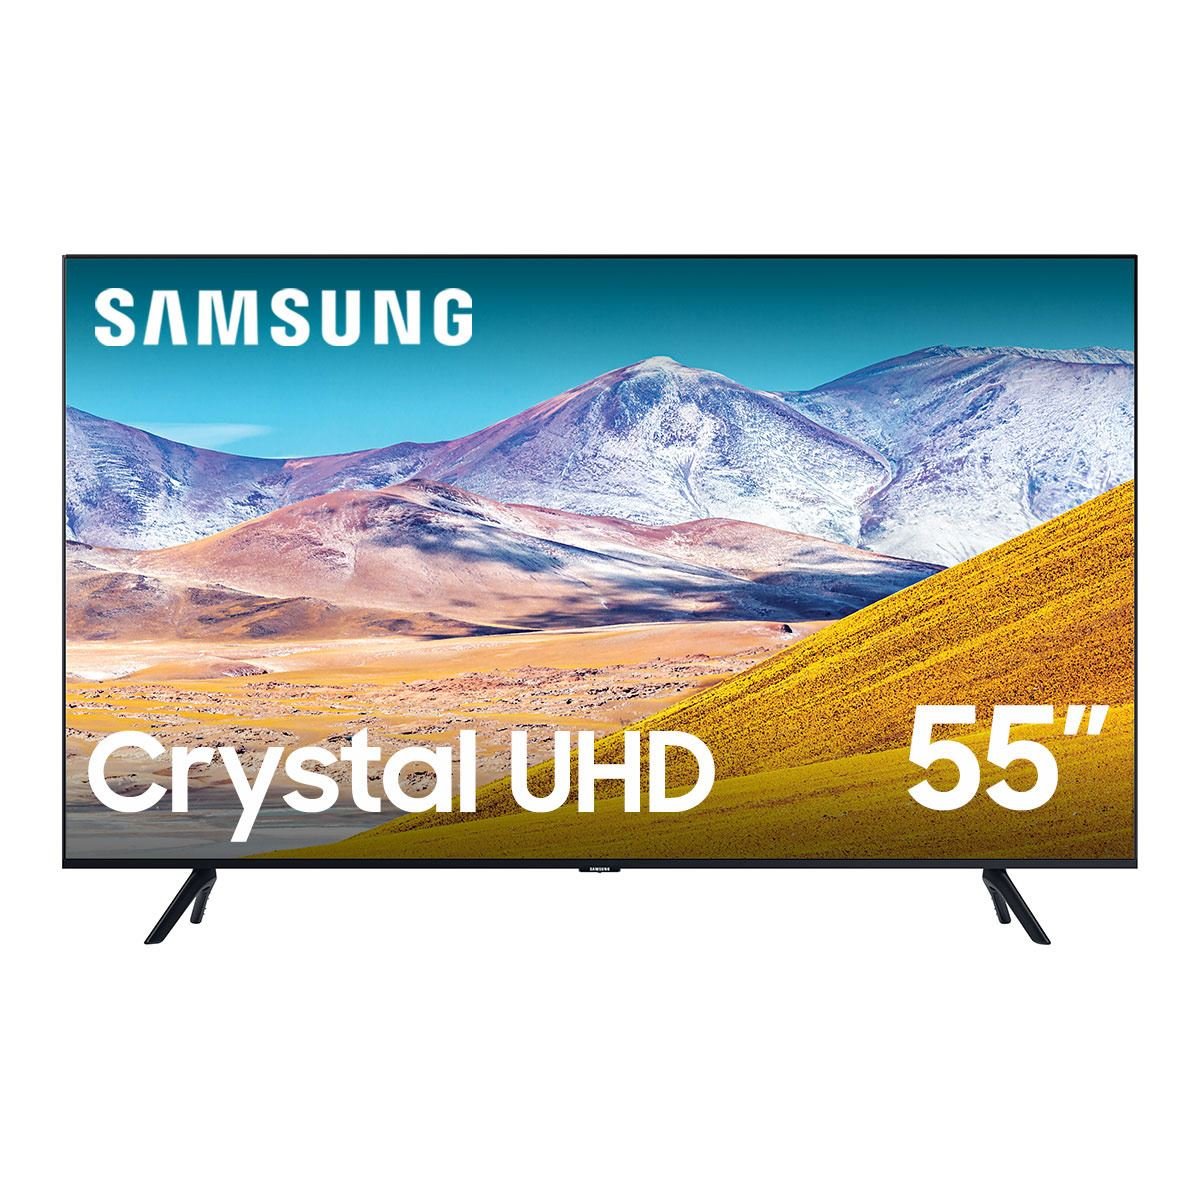 Pantalla Samsung 55" UN55TU8000 Crystal UHD 4k